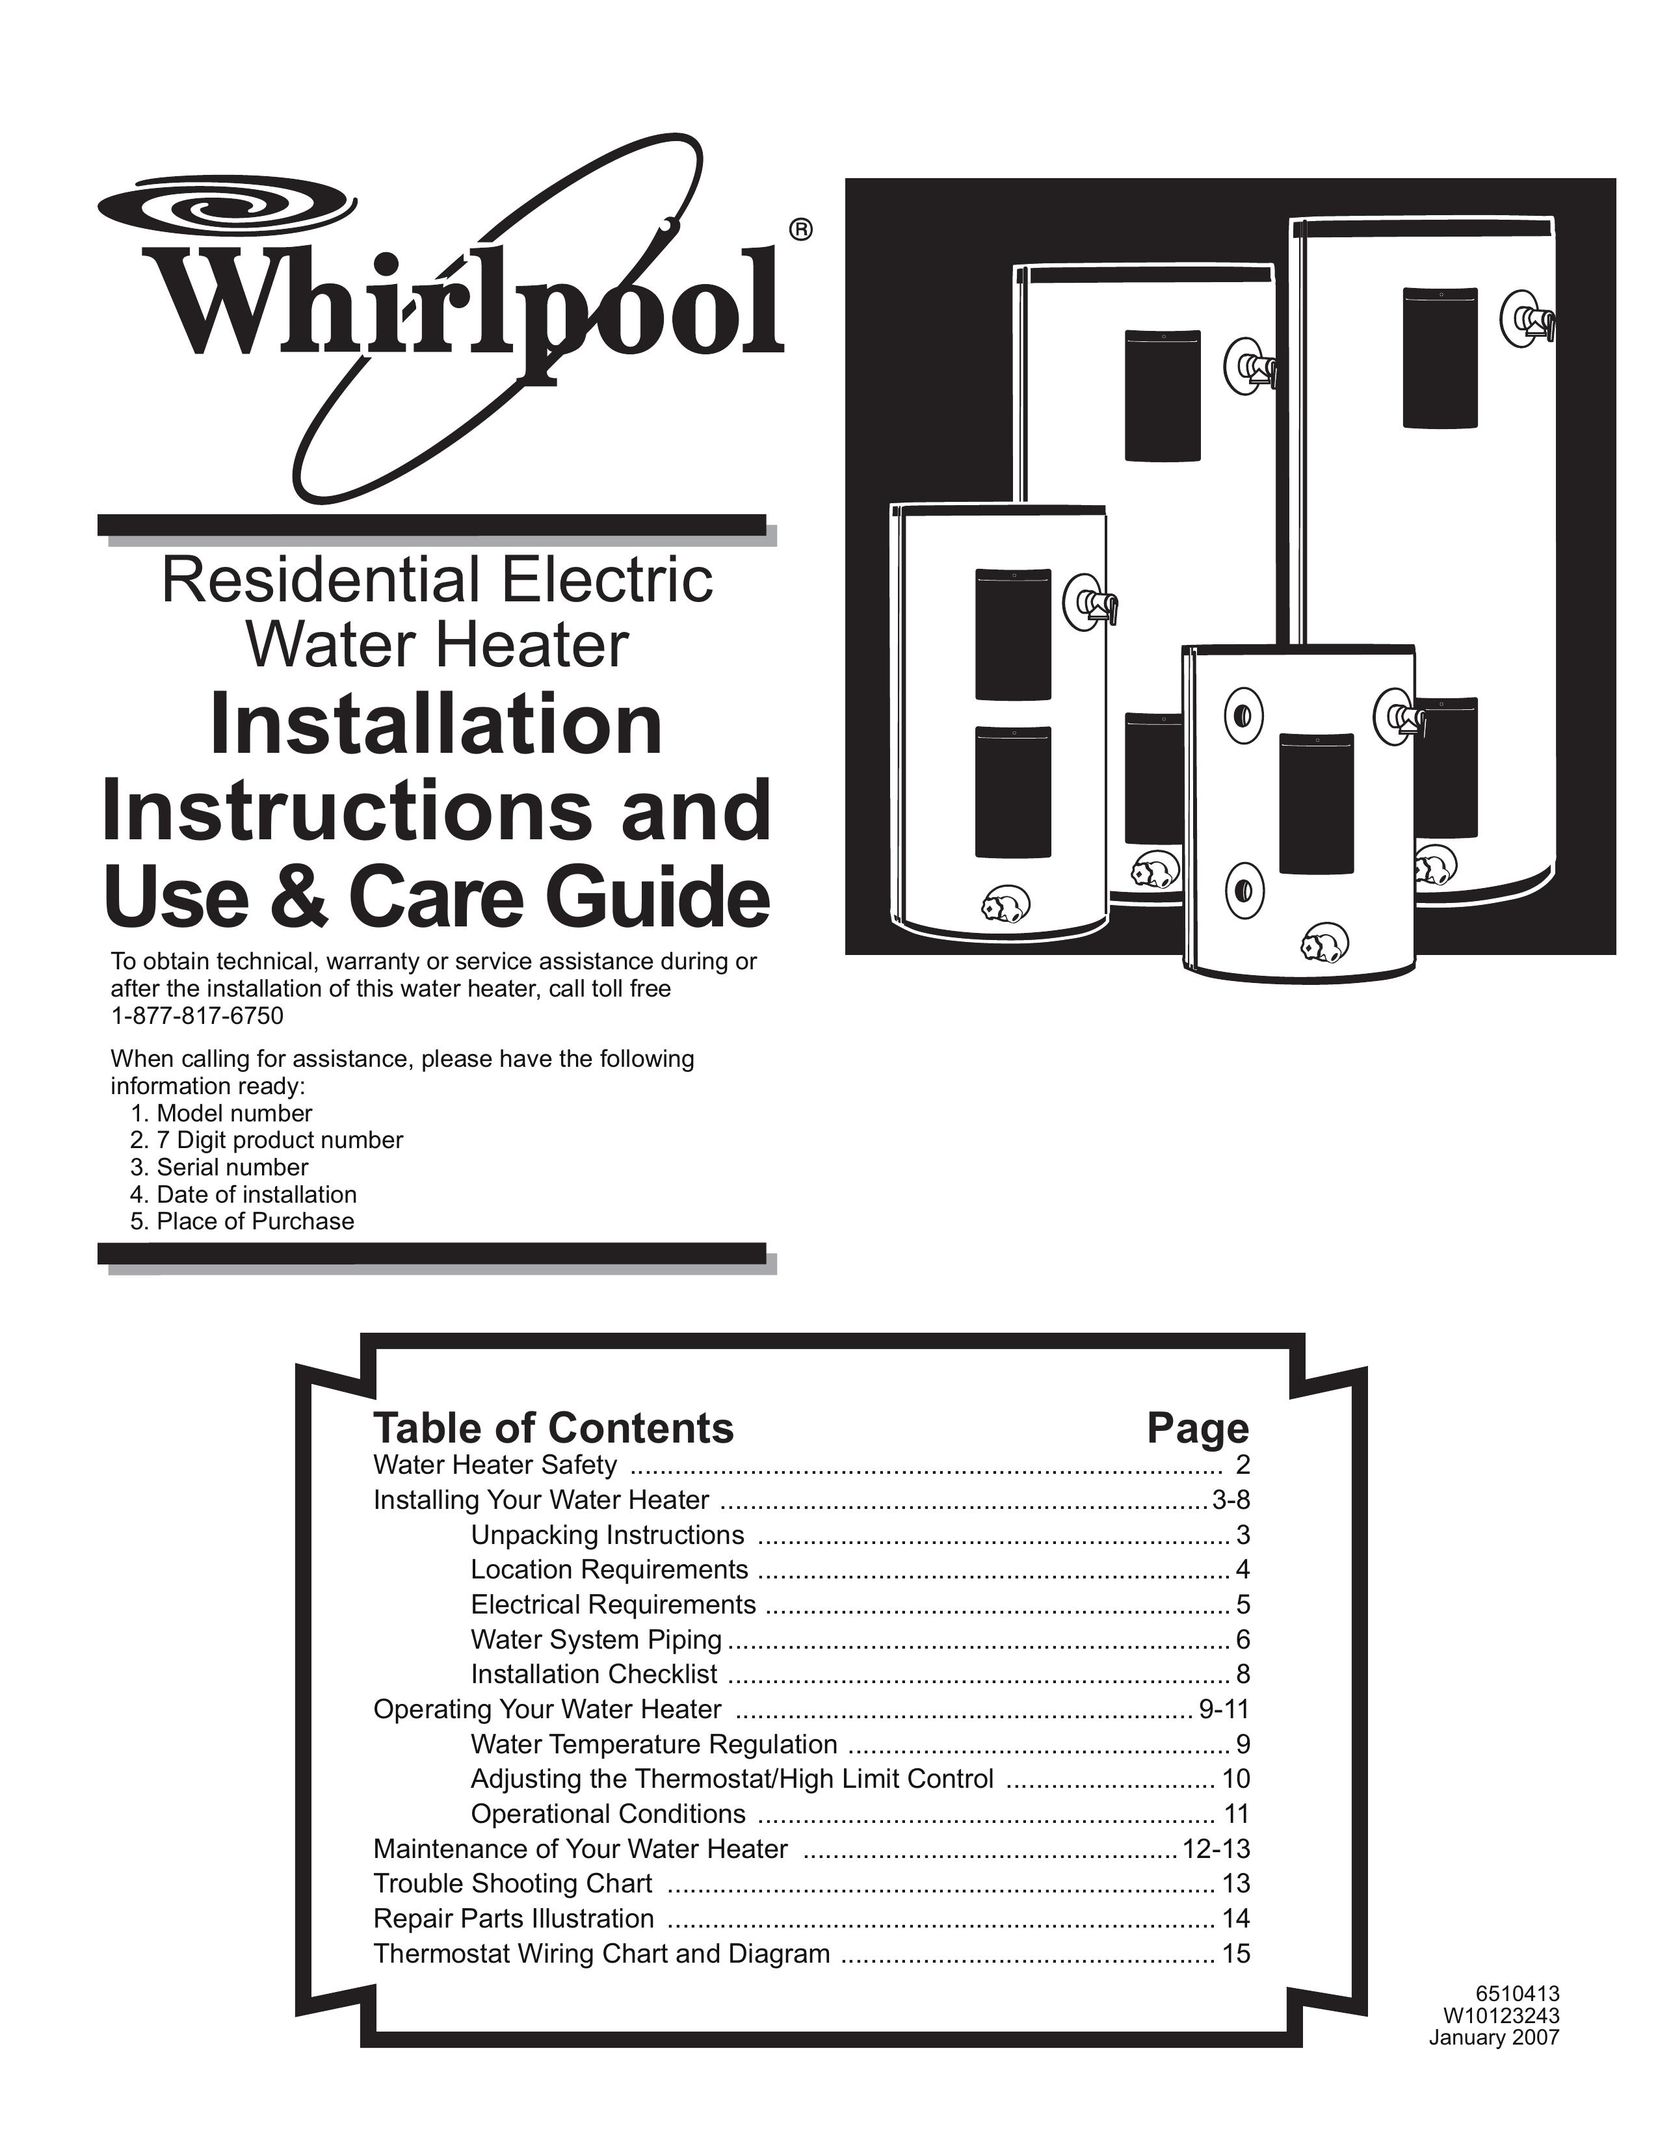 Whirlpool 140403 Water Heater User Manual